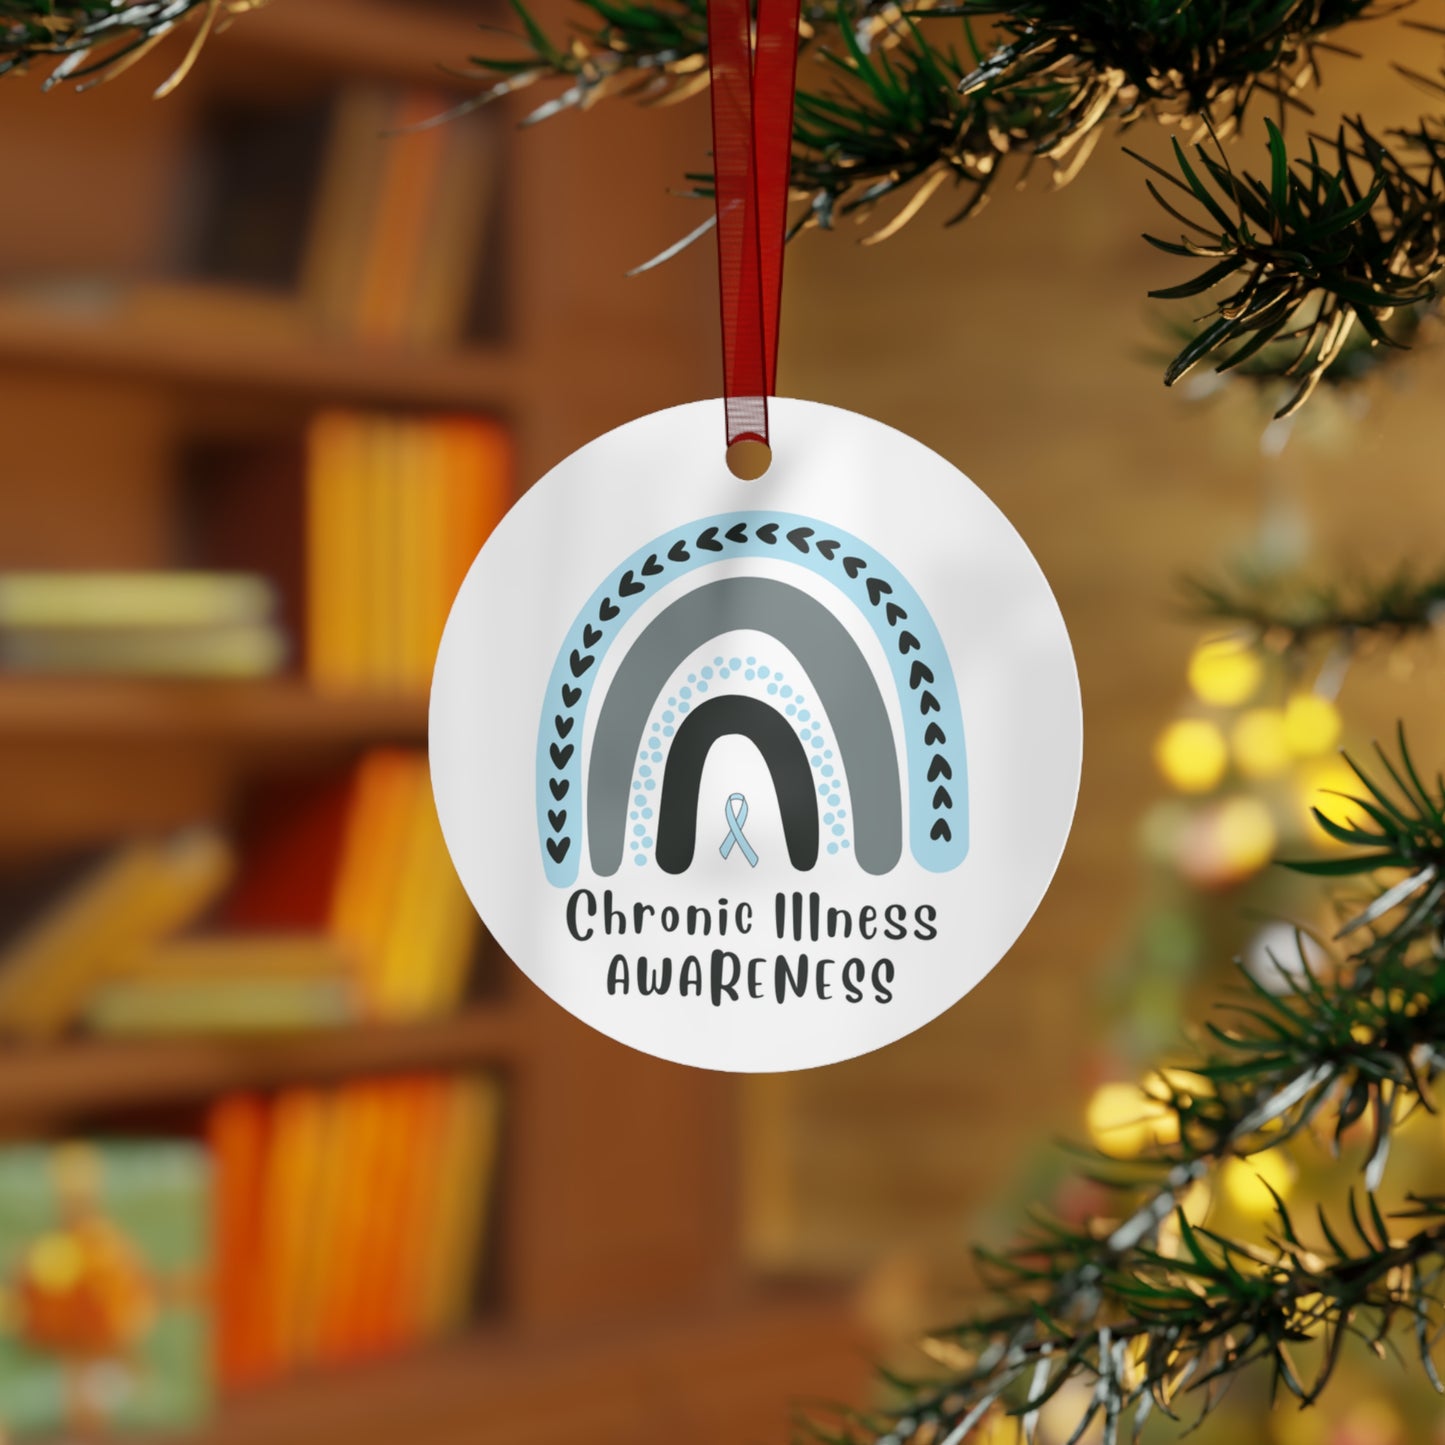 Chronic Illness Awareness Christmas Ornament Stocking Stuffer Christmas Gift, Holiday Home Decor, Wall Hanging, Support for Frien